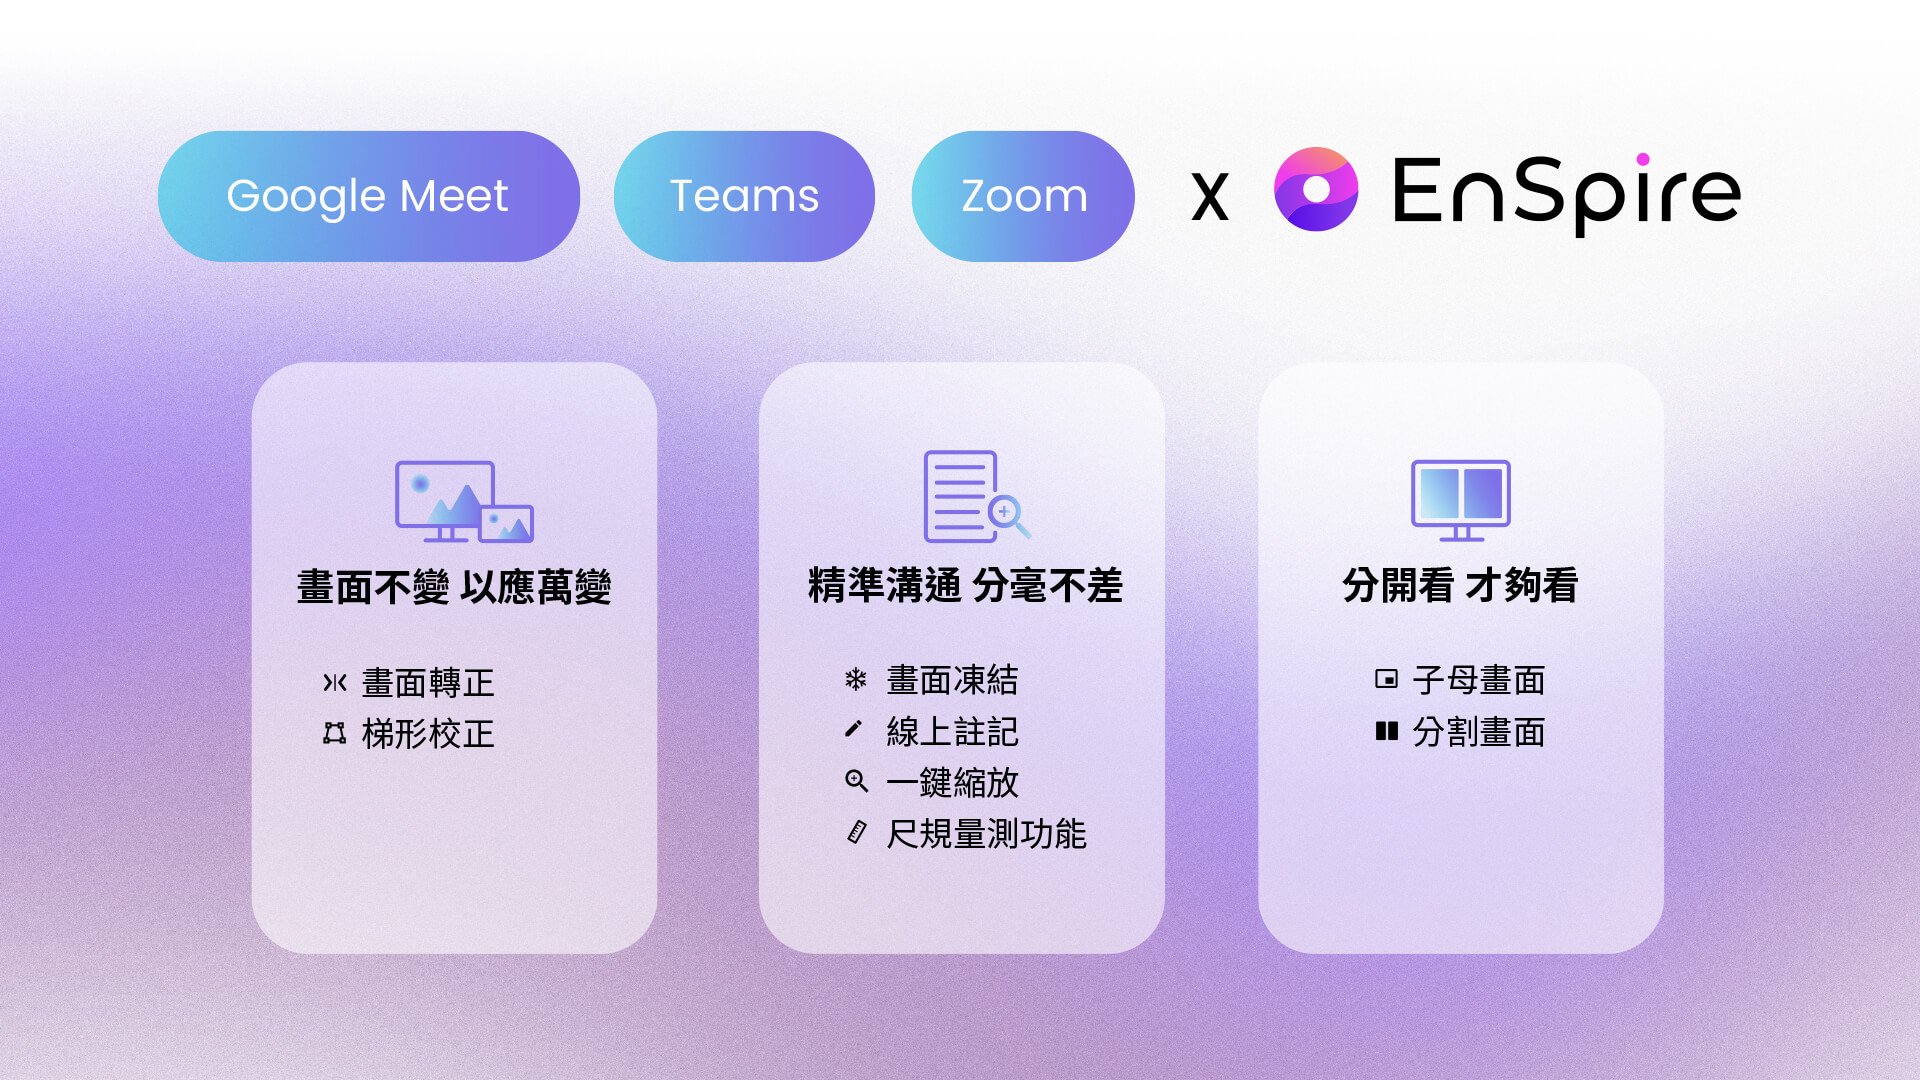 EnSpire 能與任何視訊軟體如Google Meet, Teams, Zoom 等搭配使用，只要利用視訊軟體分享EnSpire視窗畫面，即可輕鬆展示。